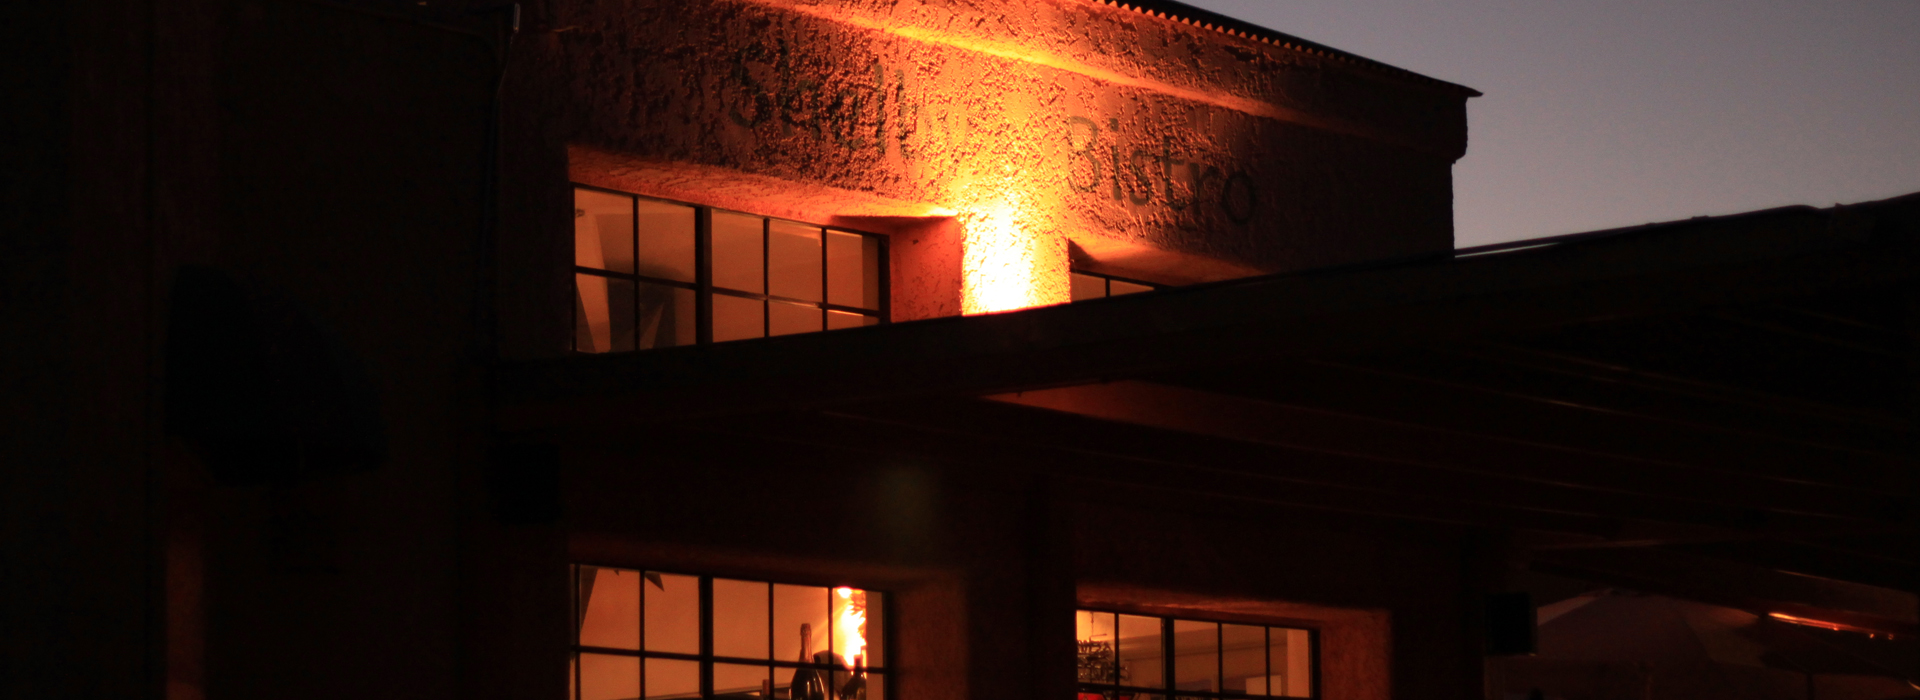 Restaurant exterior in Tubac, Arizona, illuminated at dusk